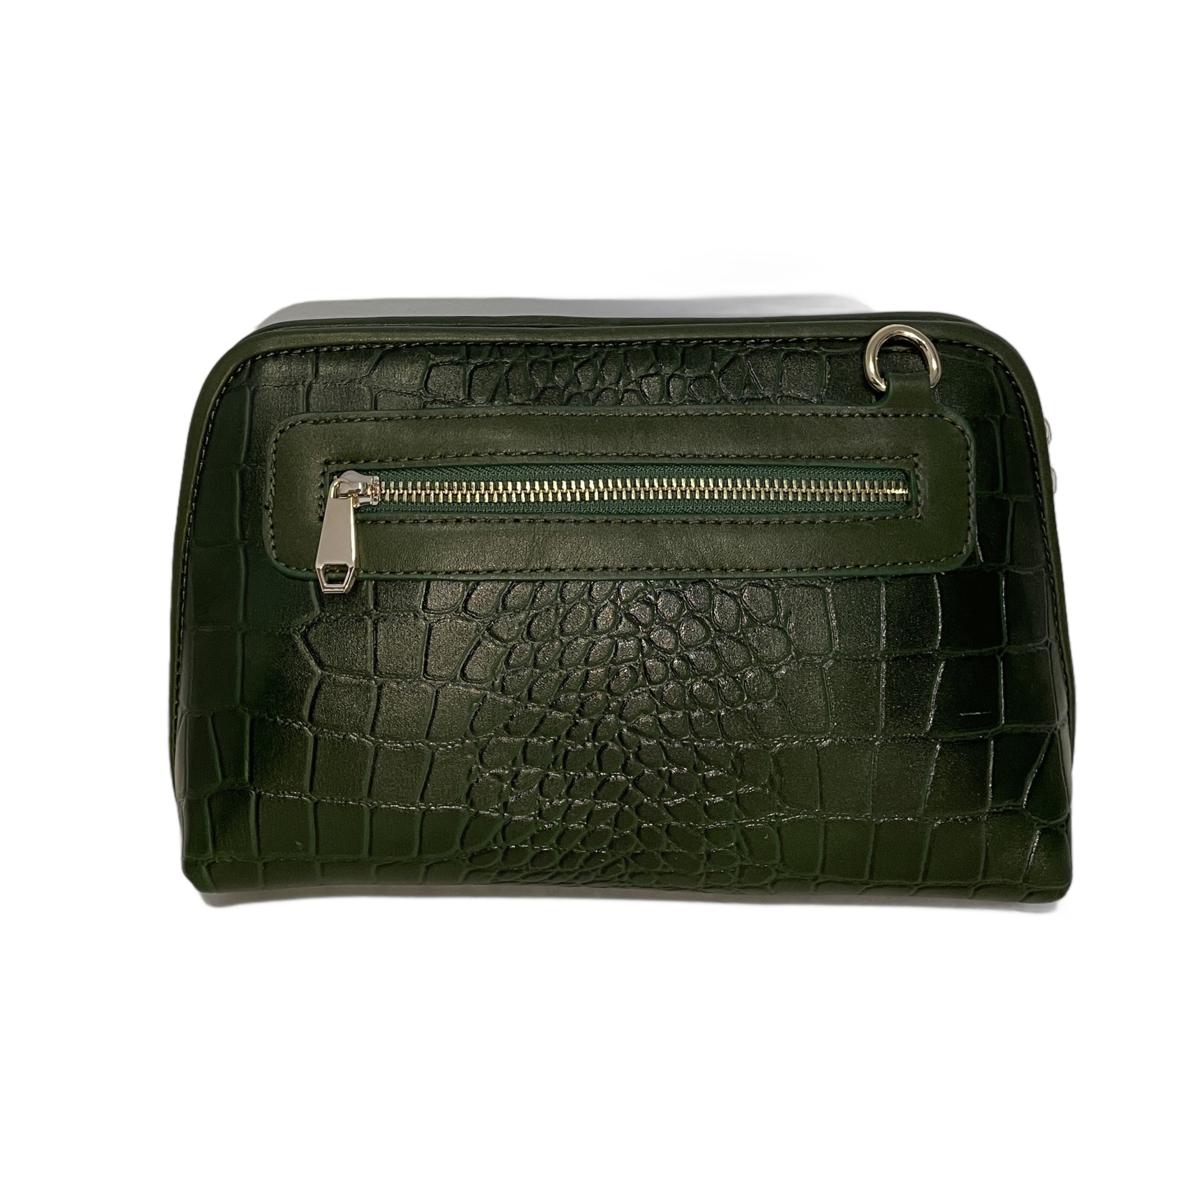 LeatherLuxe - Green Leather Clutch Bag Shoulder Bag; Crossbody